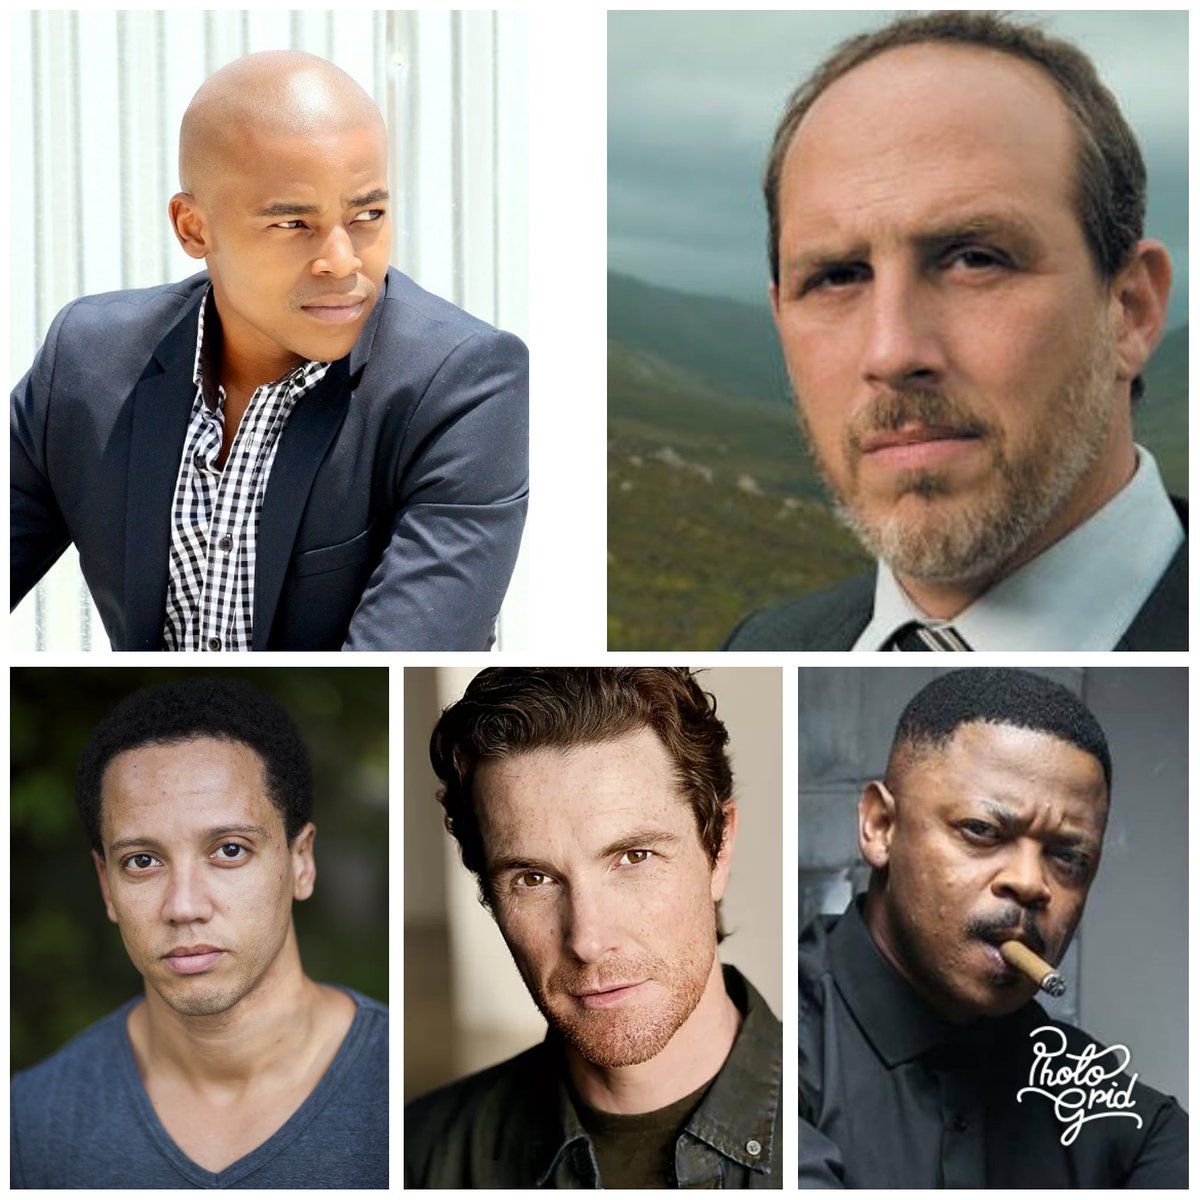 My top 5 SA actors 
Watch them - fantastic!
@loyisomacdonald @beukes_marvin @RealZolisa #WaldemarSchultz #JamesAlexander #actors #proudlySA